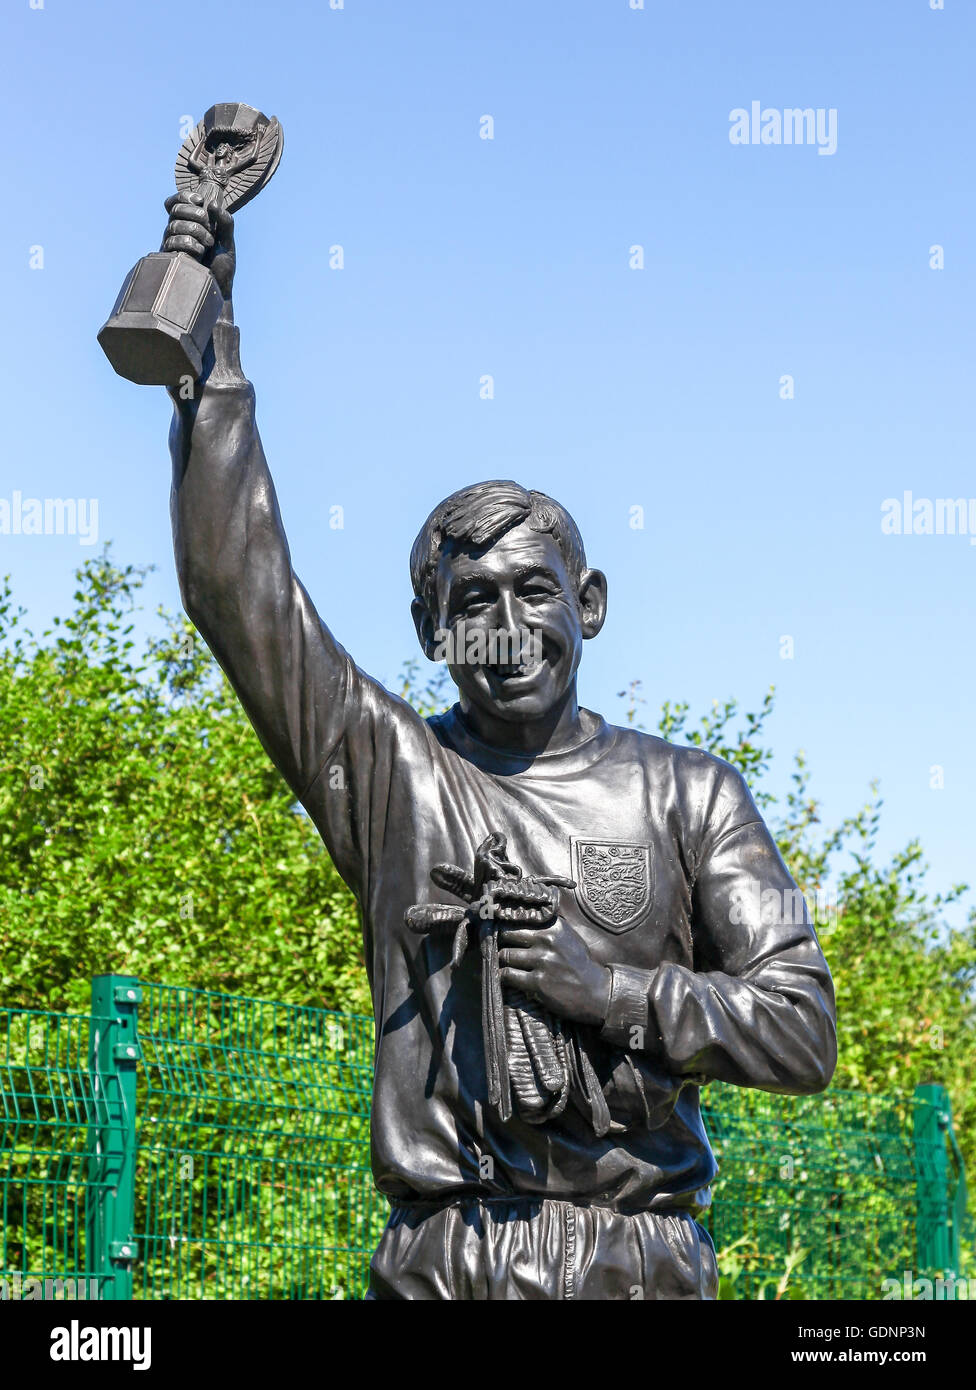 Statue of World Cup winner Gordon Banks outside the Stoke City bet365 stadium or ground Stoke-on-Trent Staffordshire England UK Stock Photo